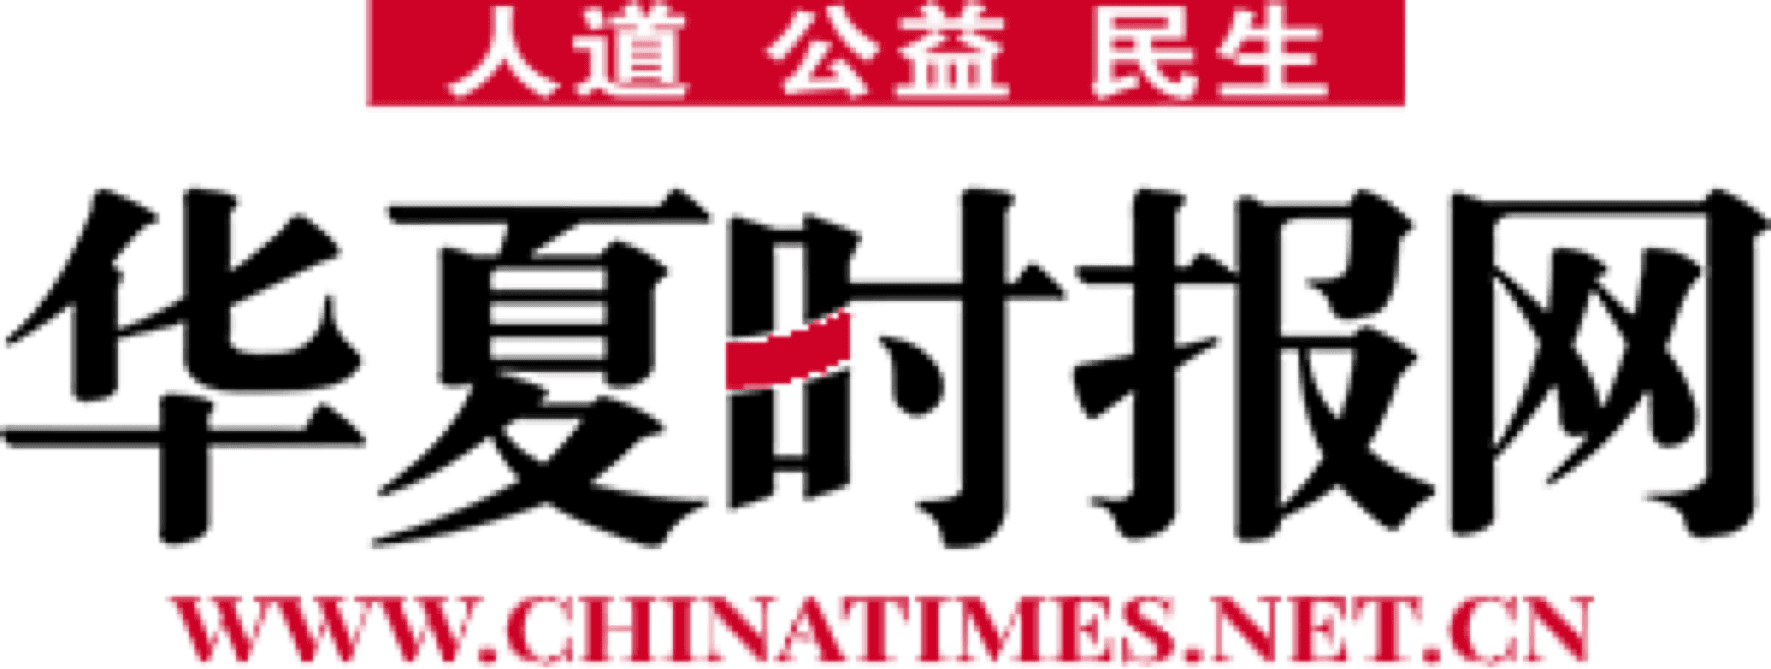 Chinatimes.net.cn